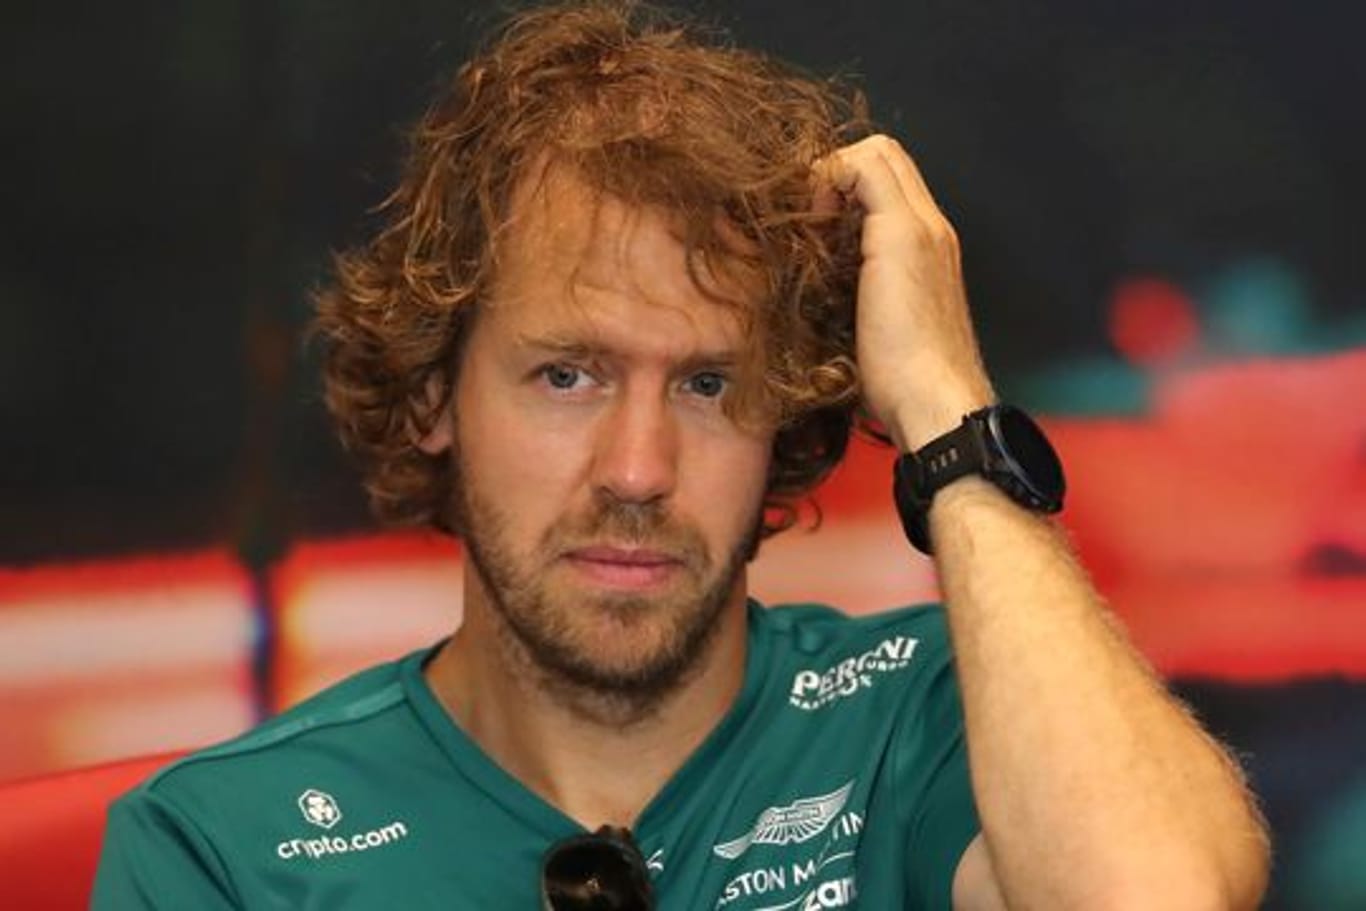 Sagt klar seine Meinung: Aston-Martin-Pilot Sebastian Vettel.